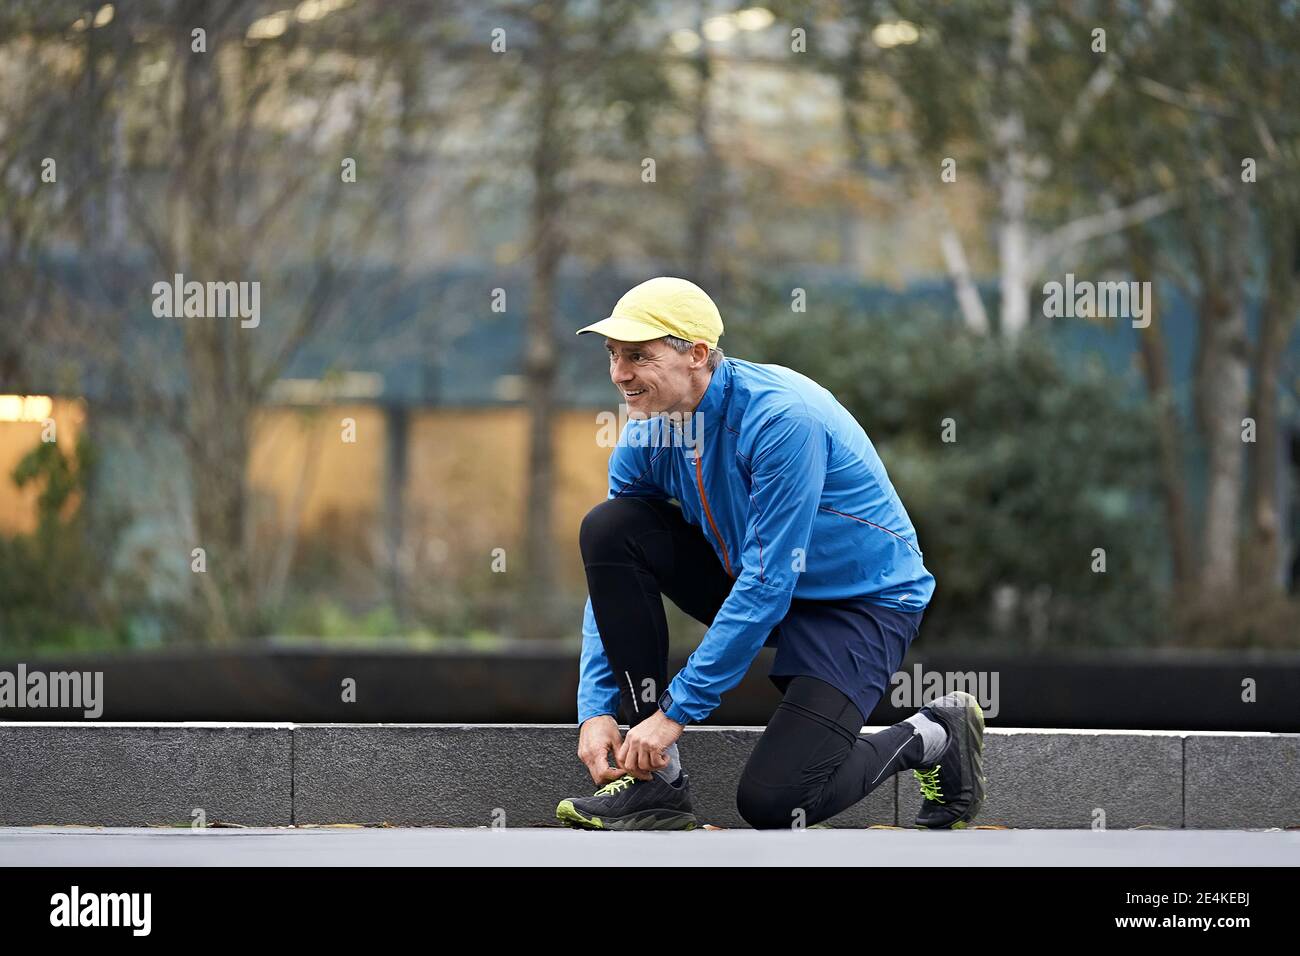 Smiling mature man tying shoelace on footpath while exercising Stock Photo